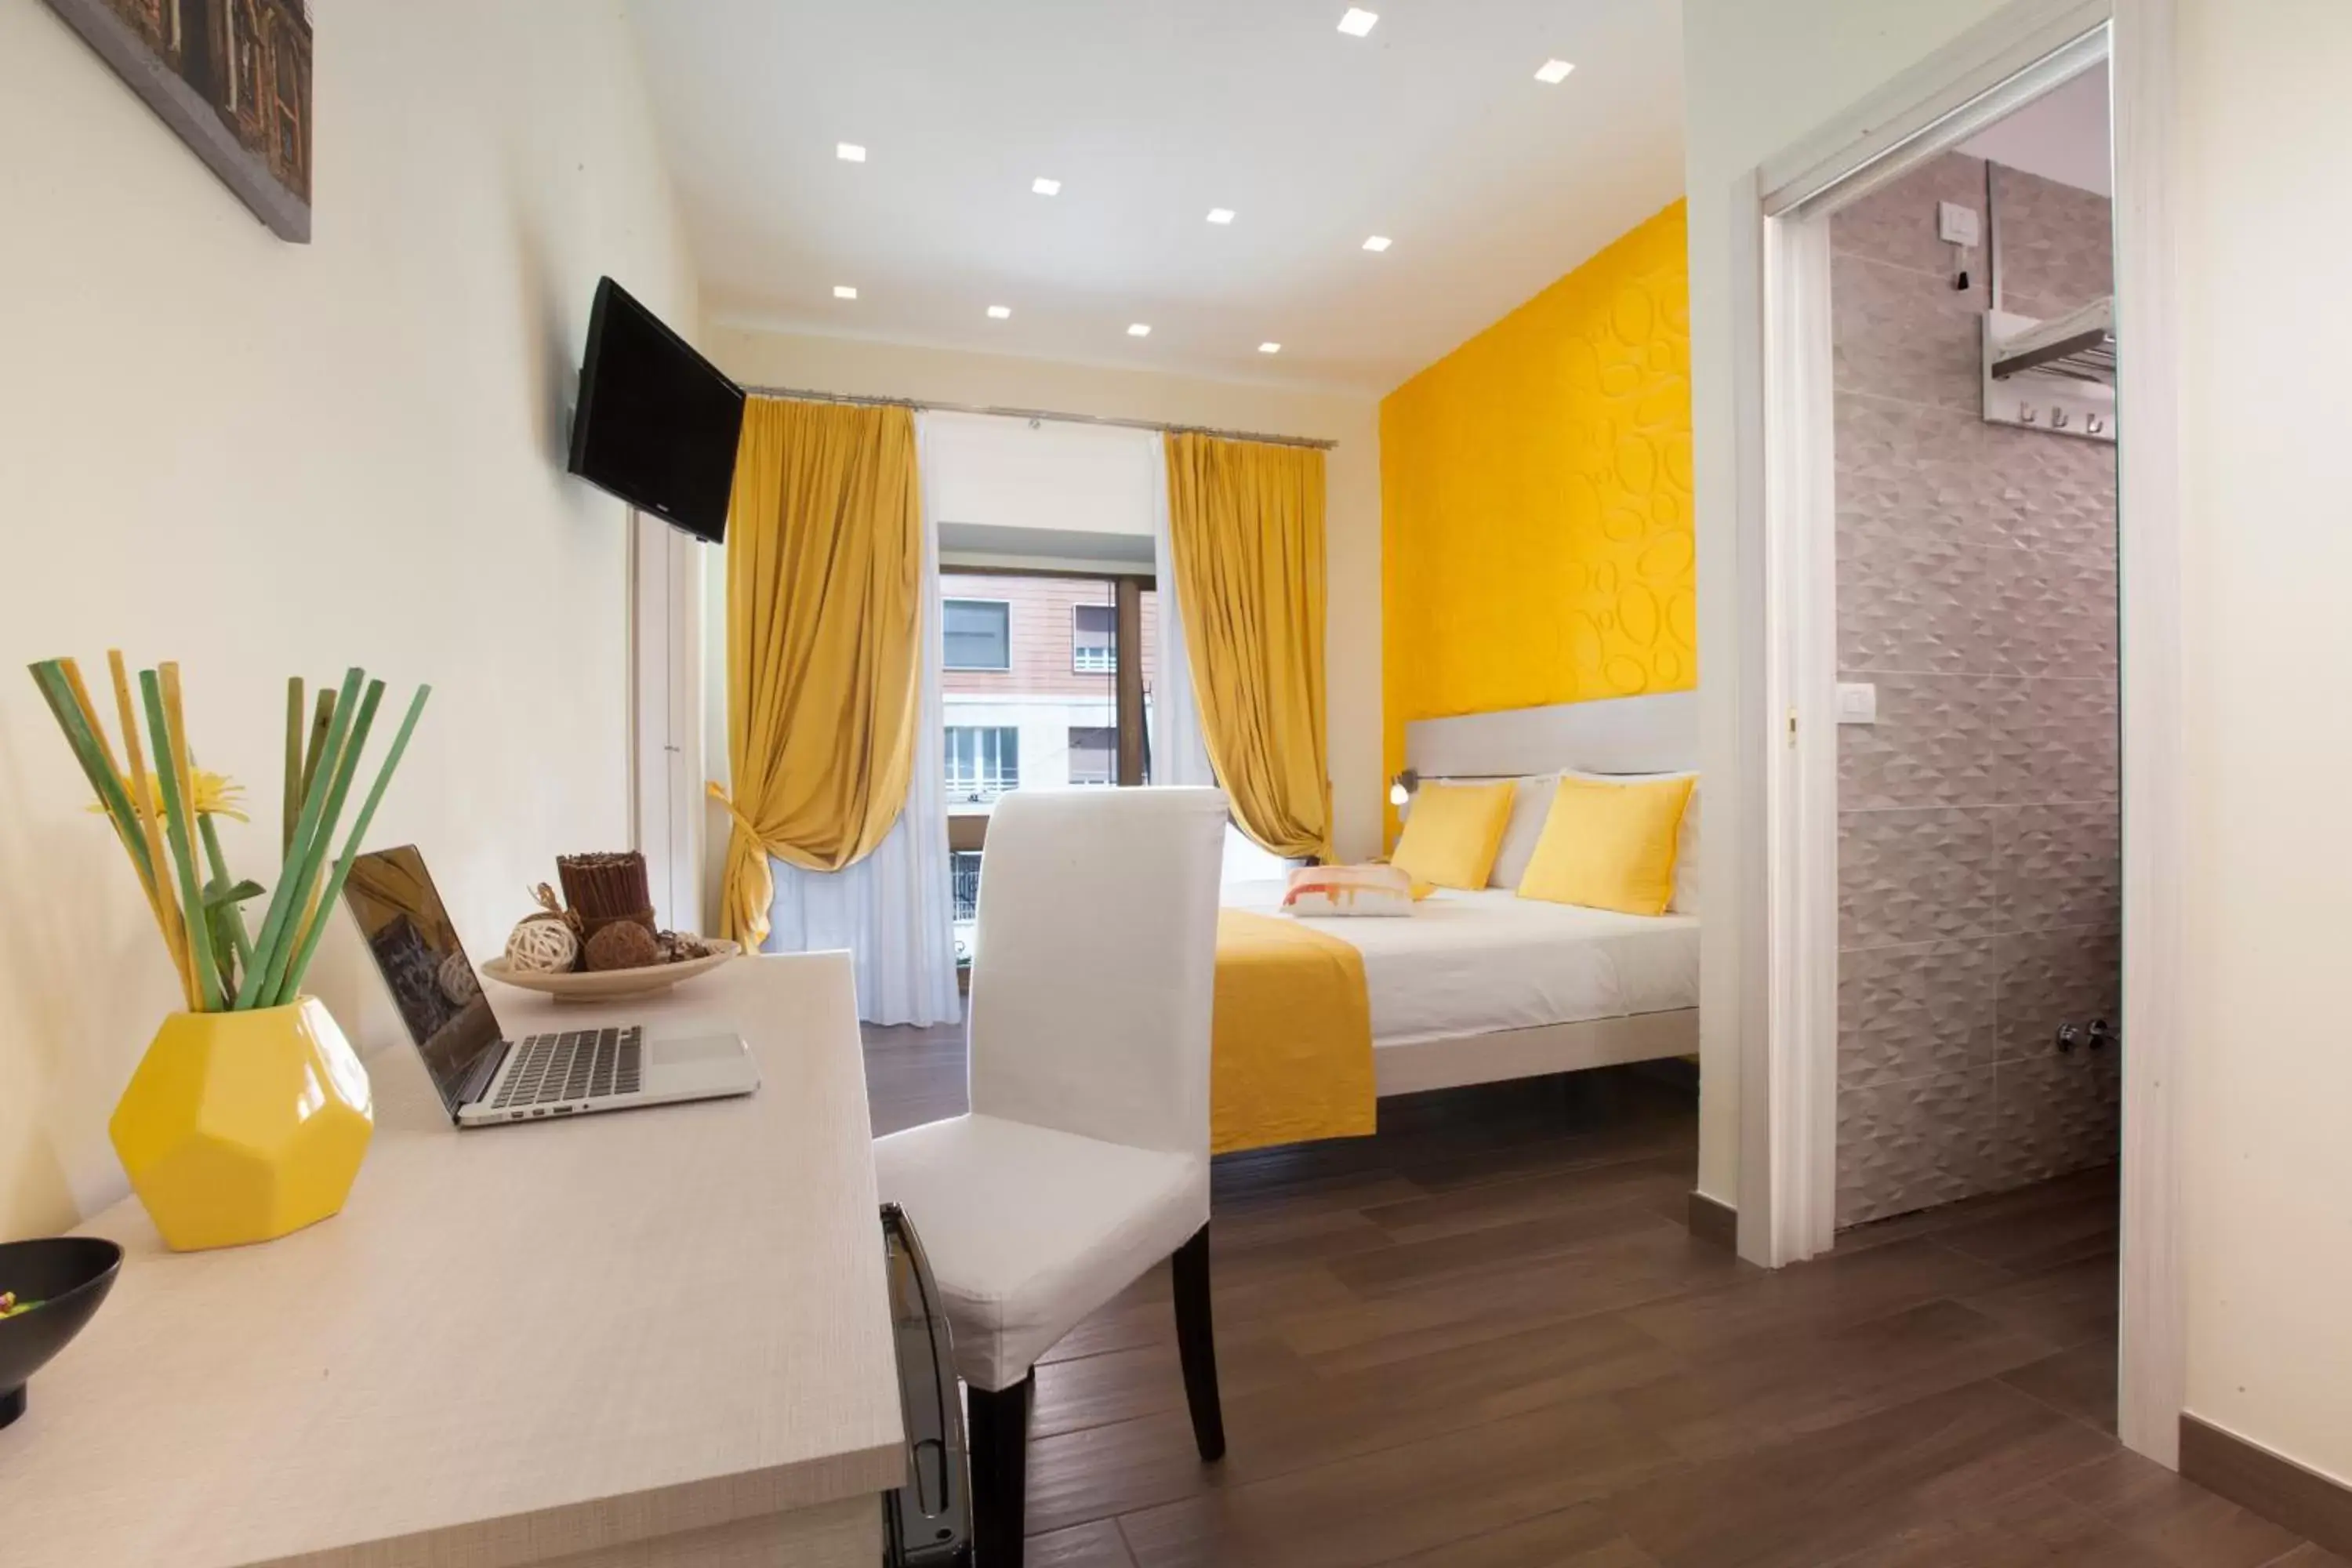 Bedroom in Suite dei Catalani